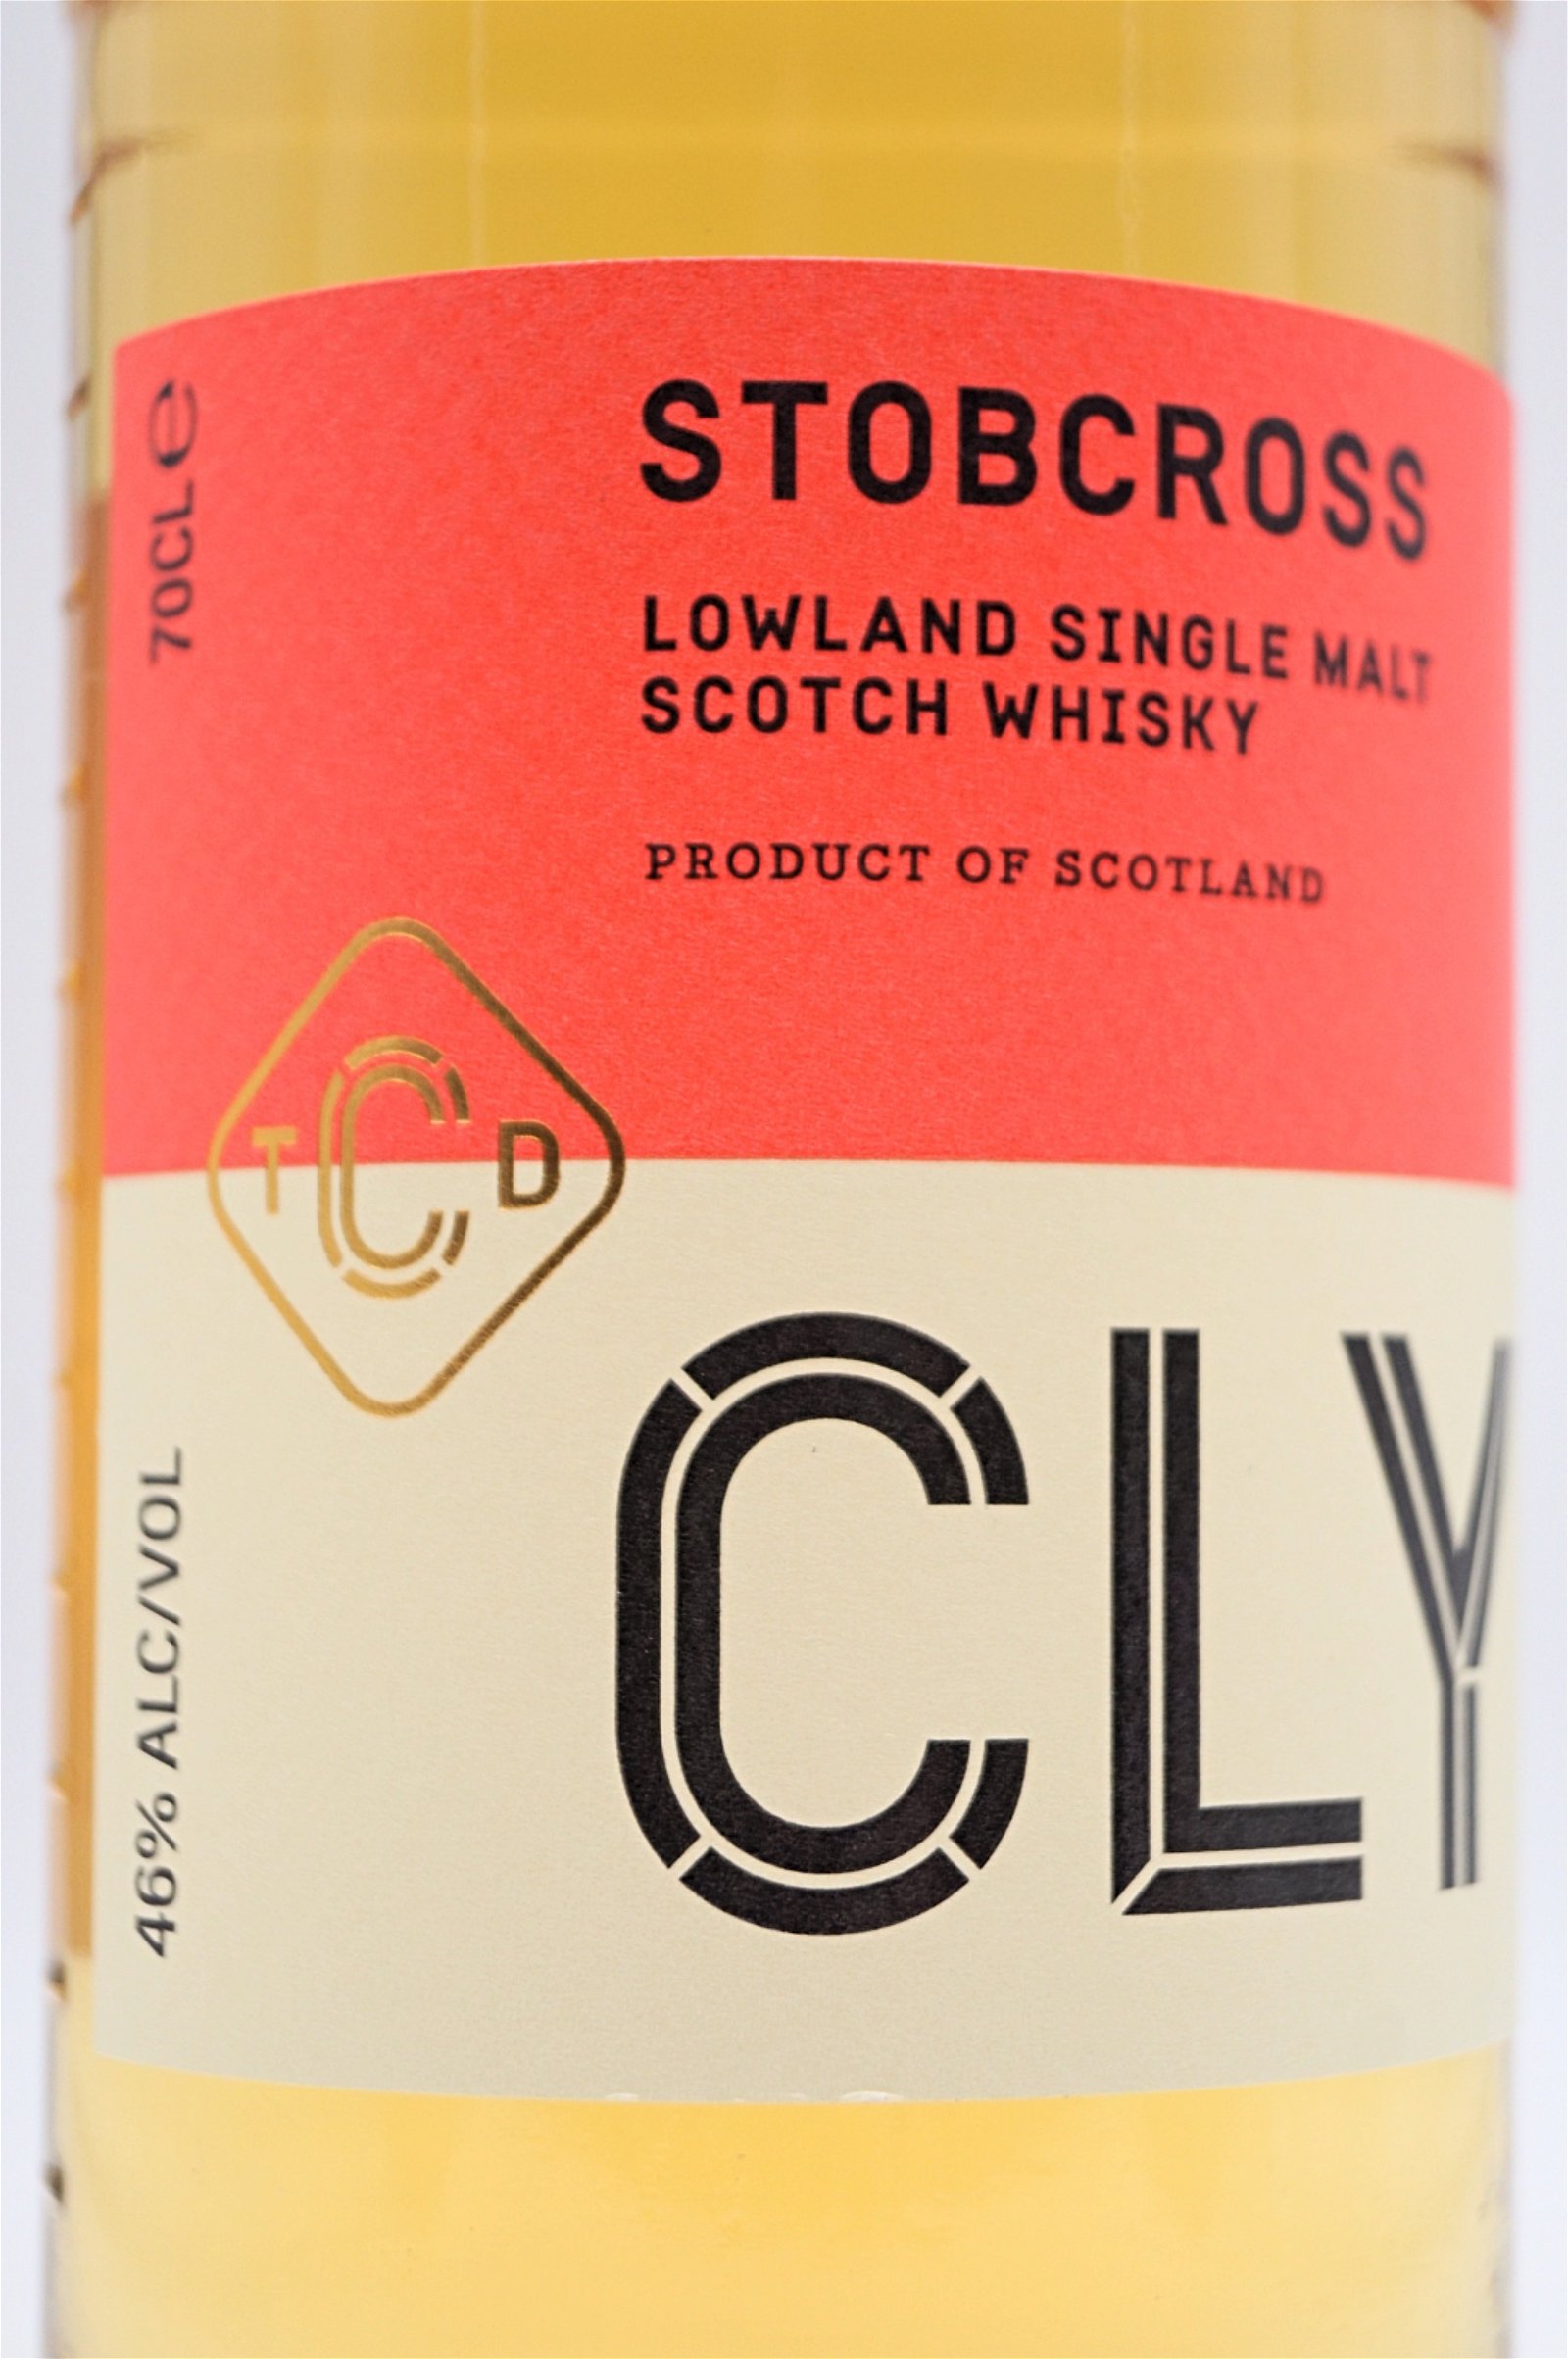 The Clydeside Stobcross Lowland Single Malt Scotch Whisky